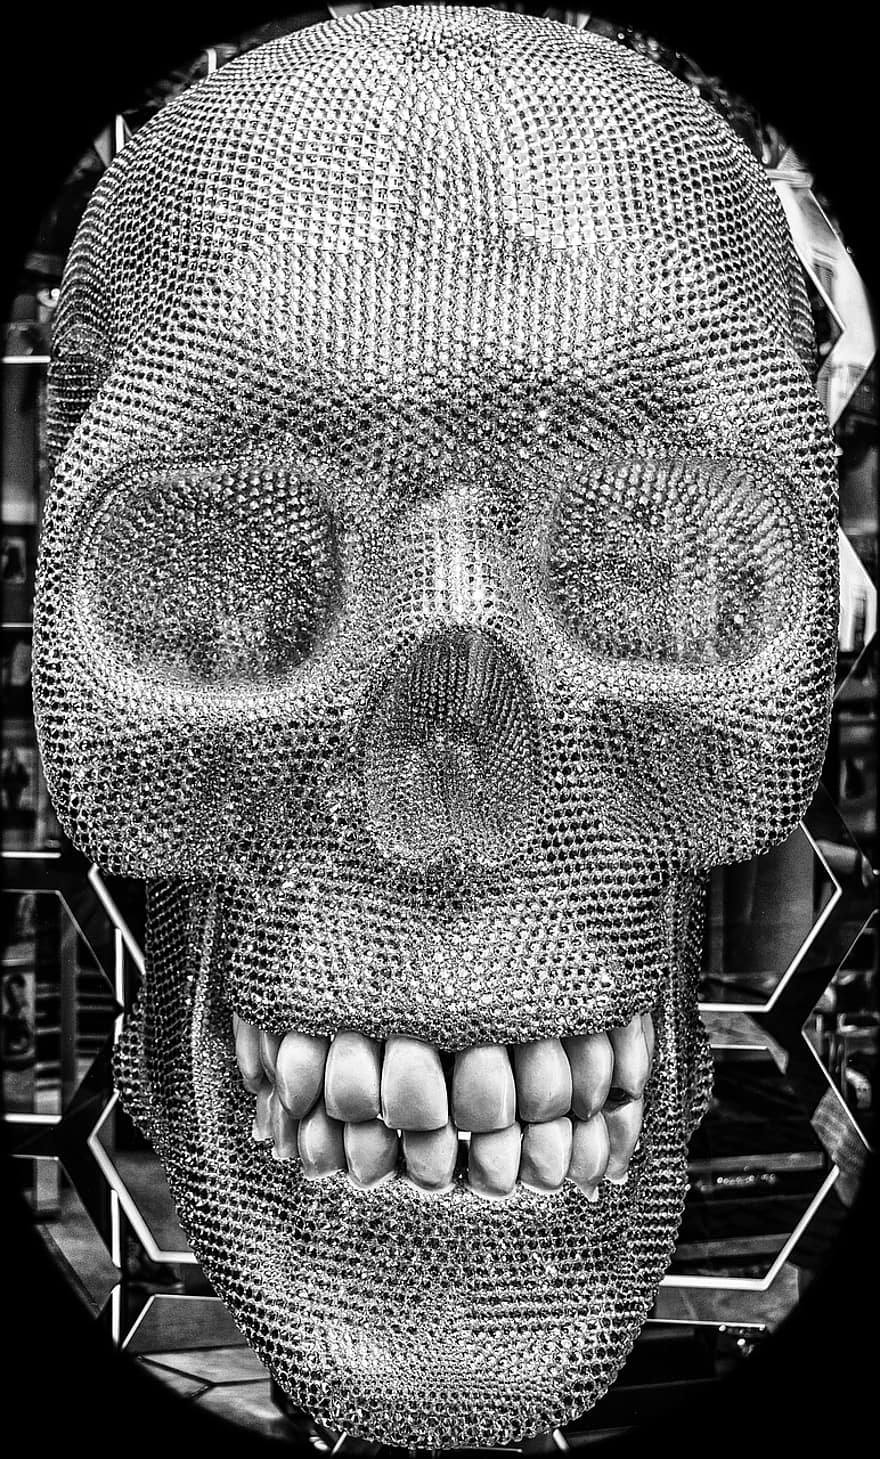 Skull, Skull And Crossbones, Tooth, Symbol, Risk, Death, Warning, Rhinestone, Diamonds, Precious, Fashion